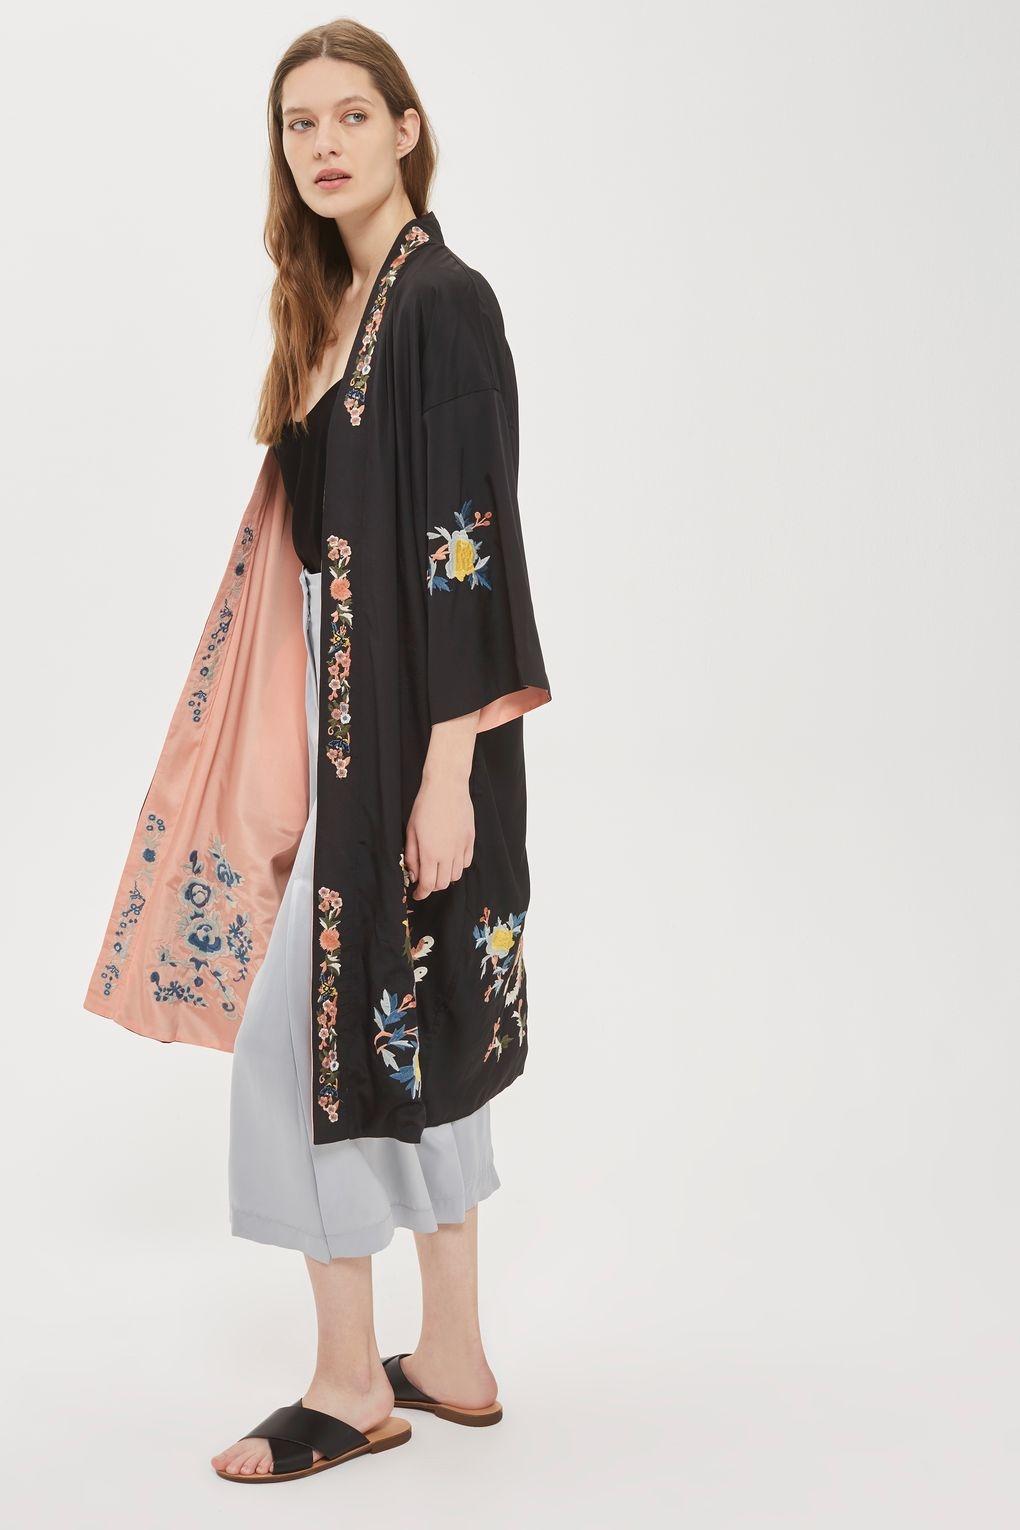 Top Shop Kimono